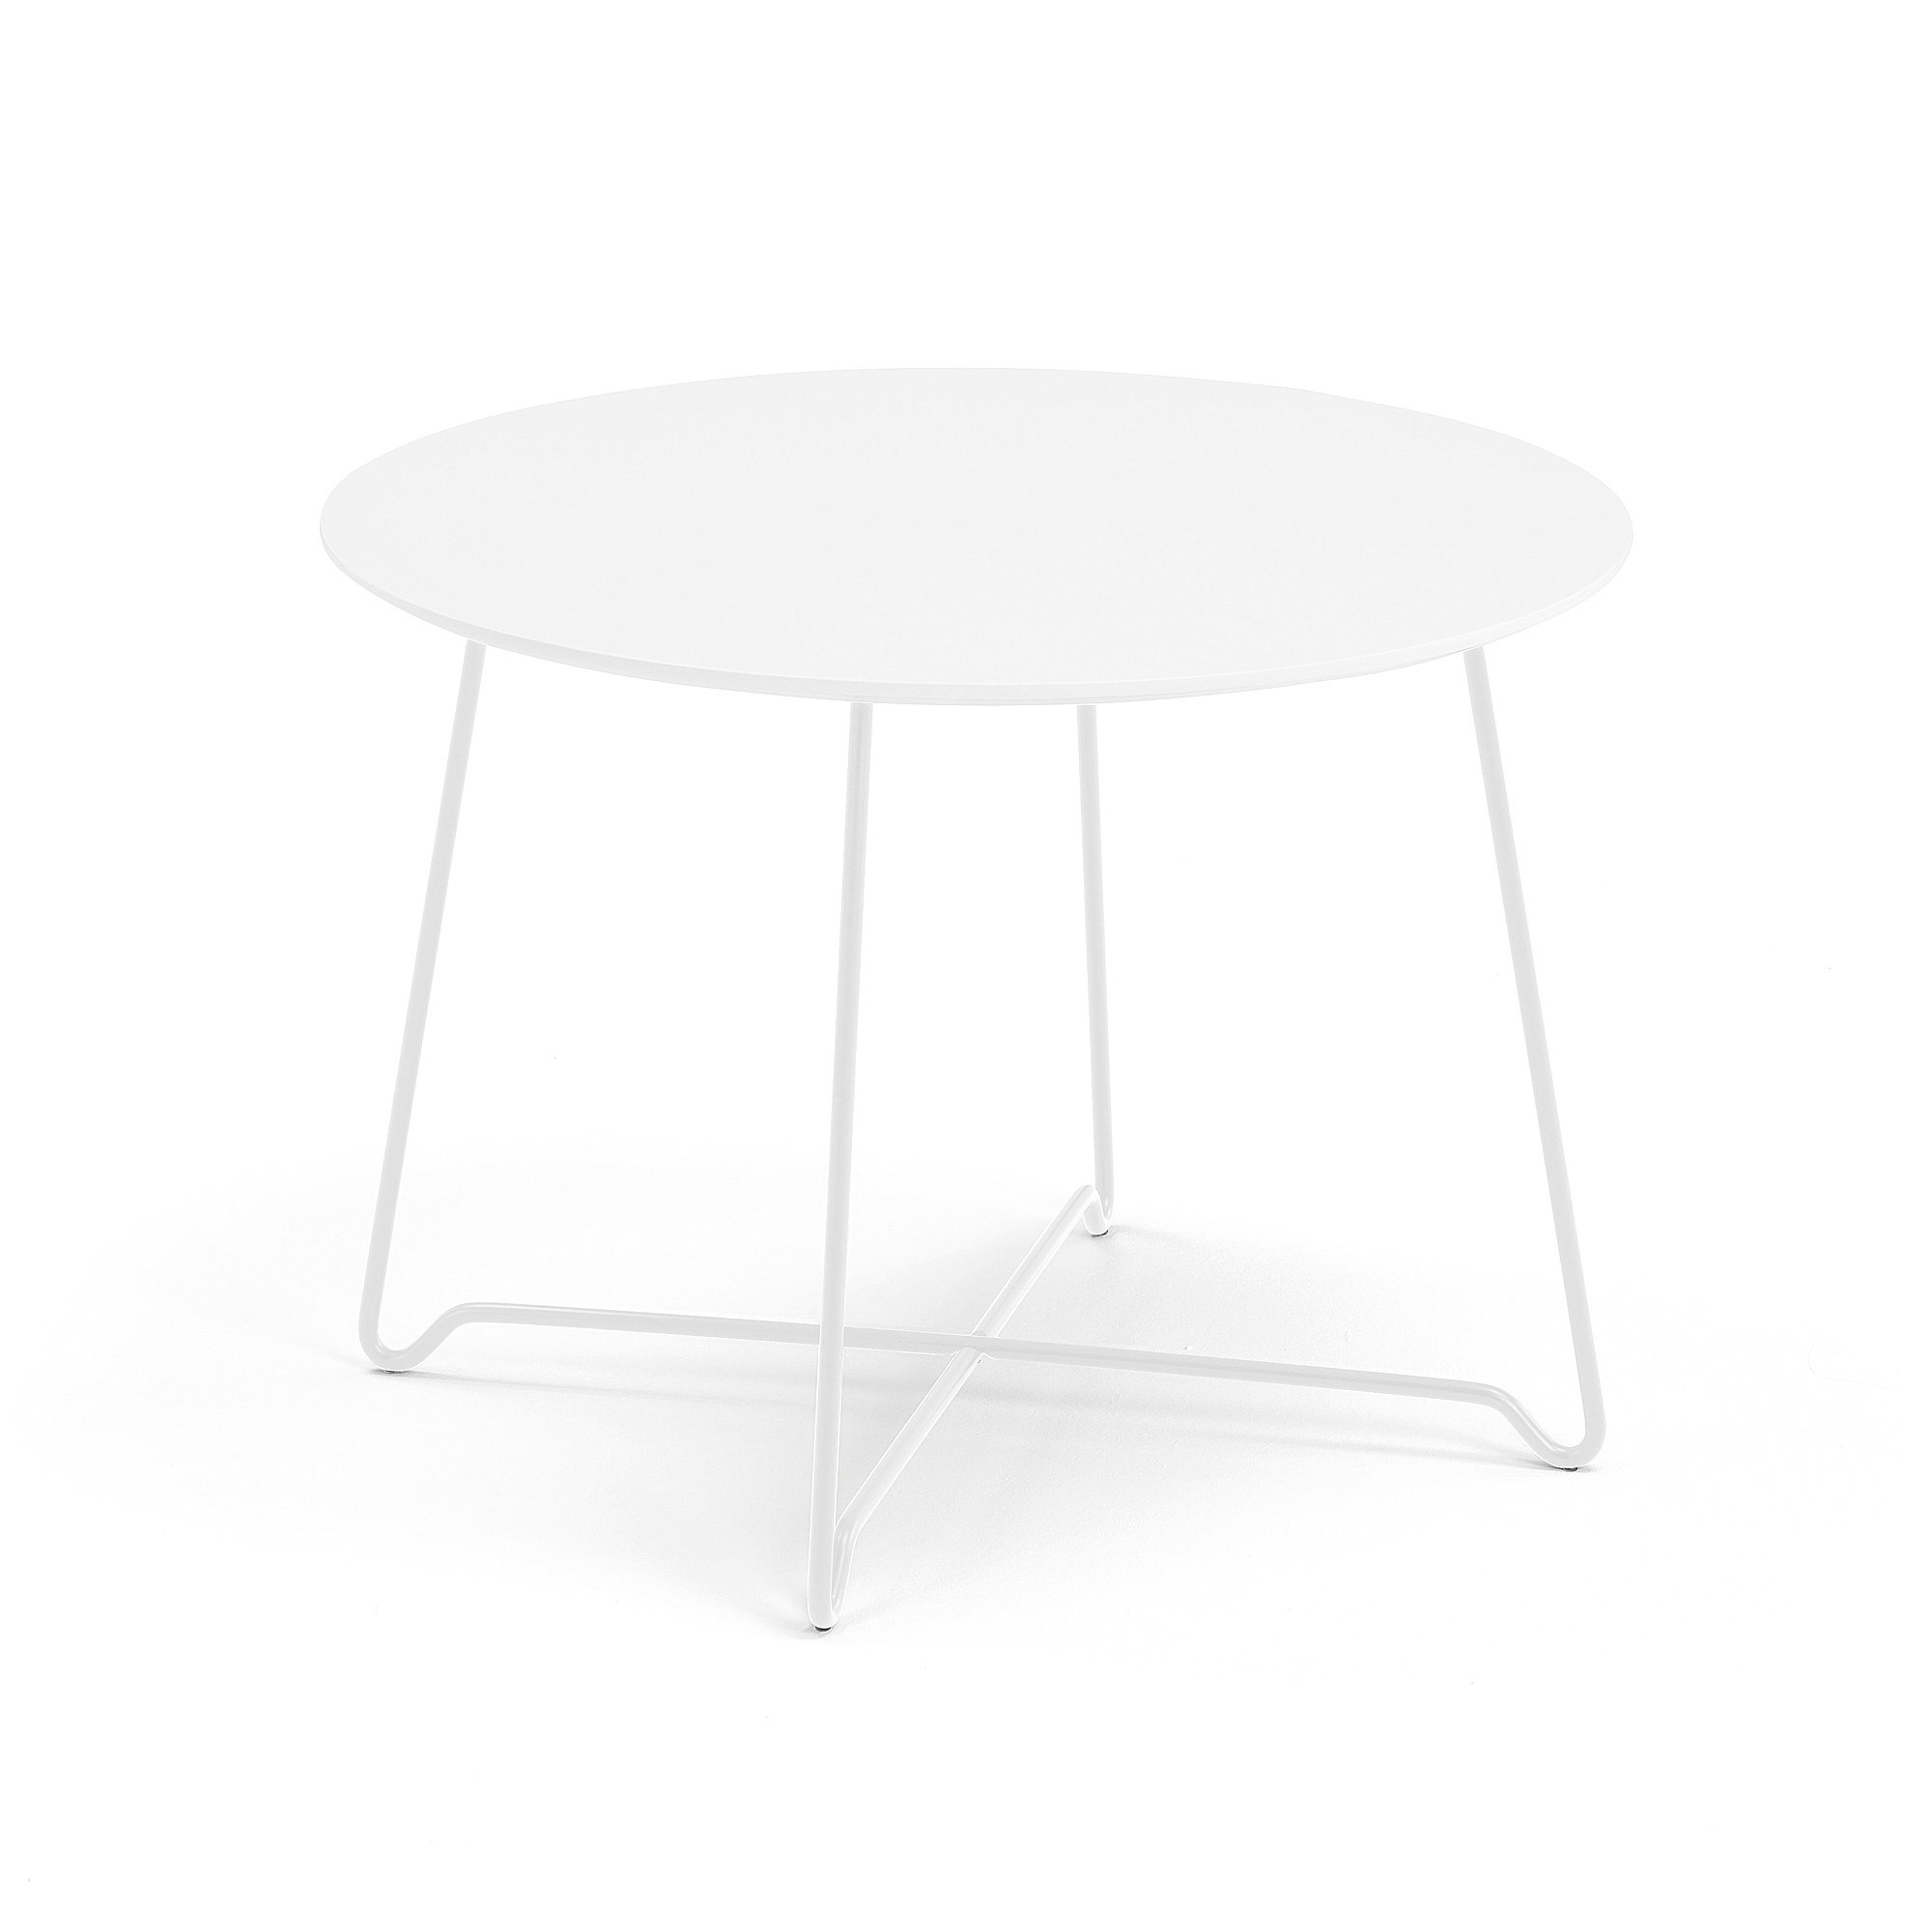 Konferenční stolek IRIS, Ø700 mm, bílá, bílá deska